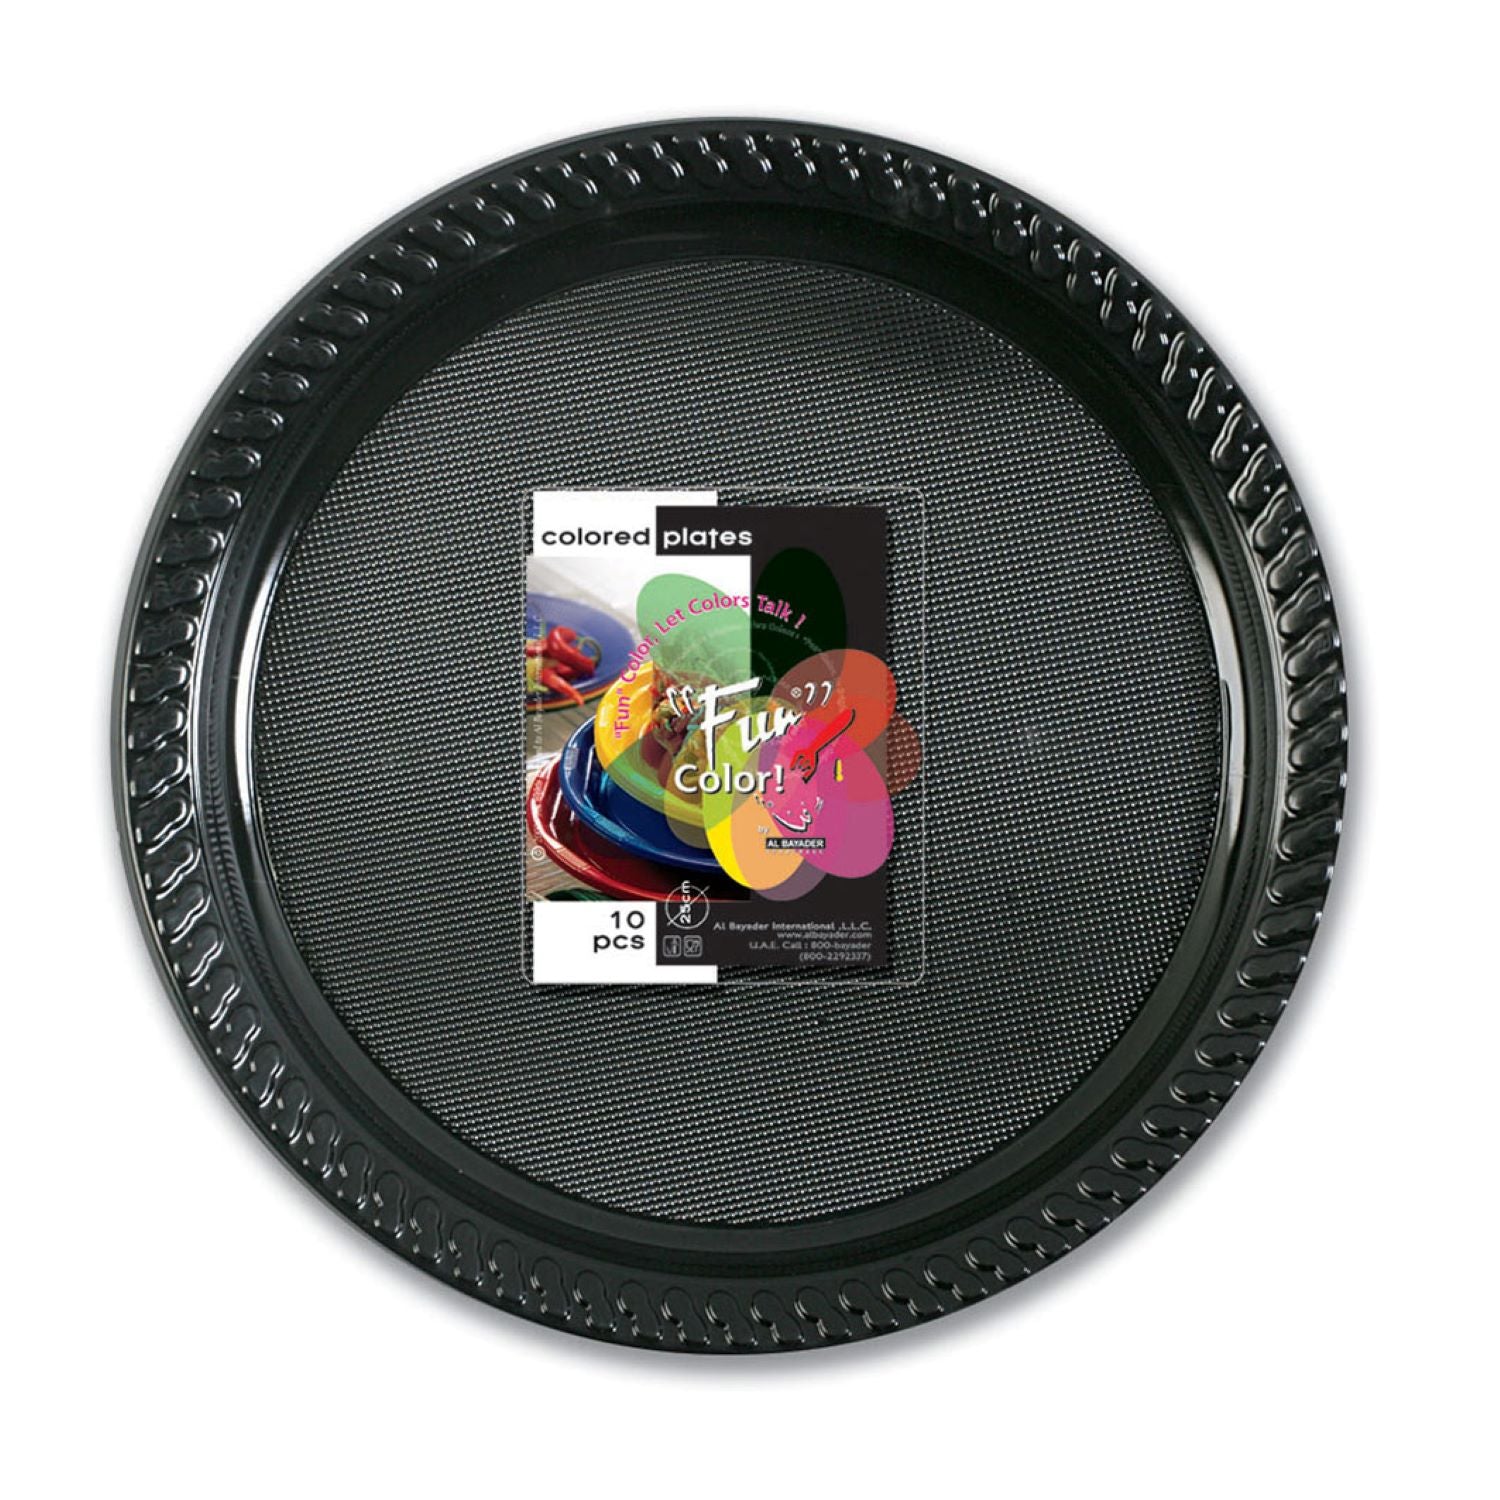 Fun® Color Party Plastic Plates set, Black, Large, Pack of 10